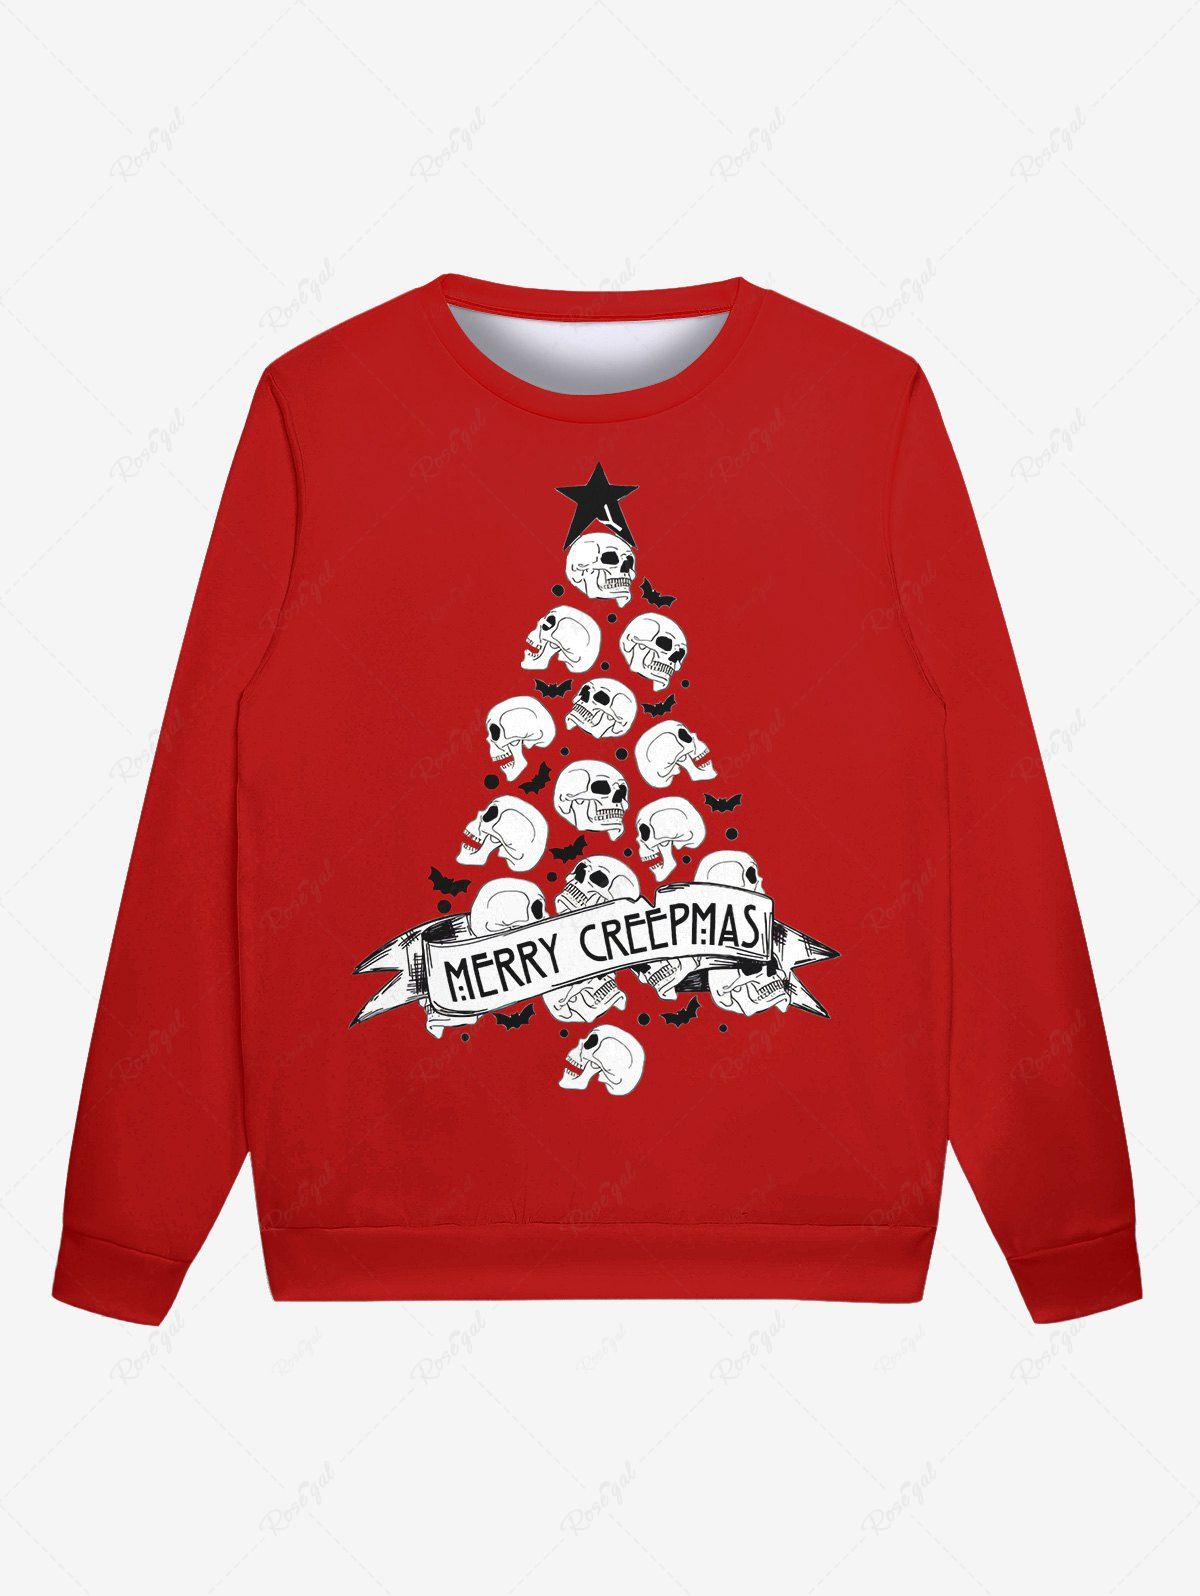 Gothic Christmas Tree Skulls Star Bat Ribbon Print Sweatshirt For Men Rouge 6XL